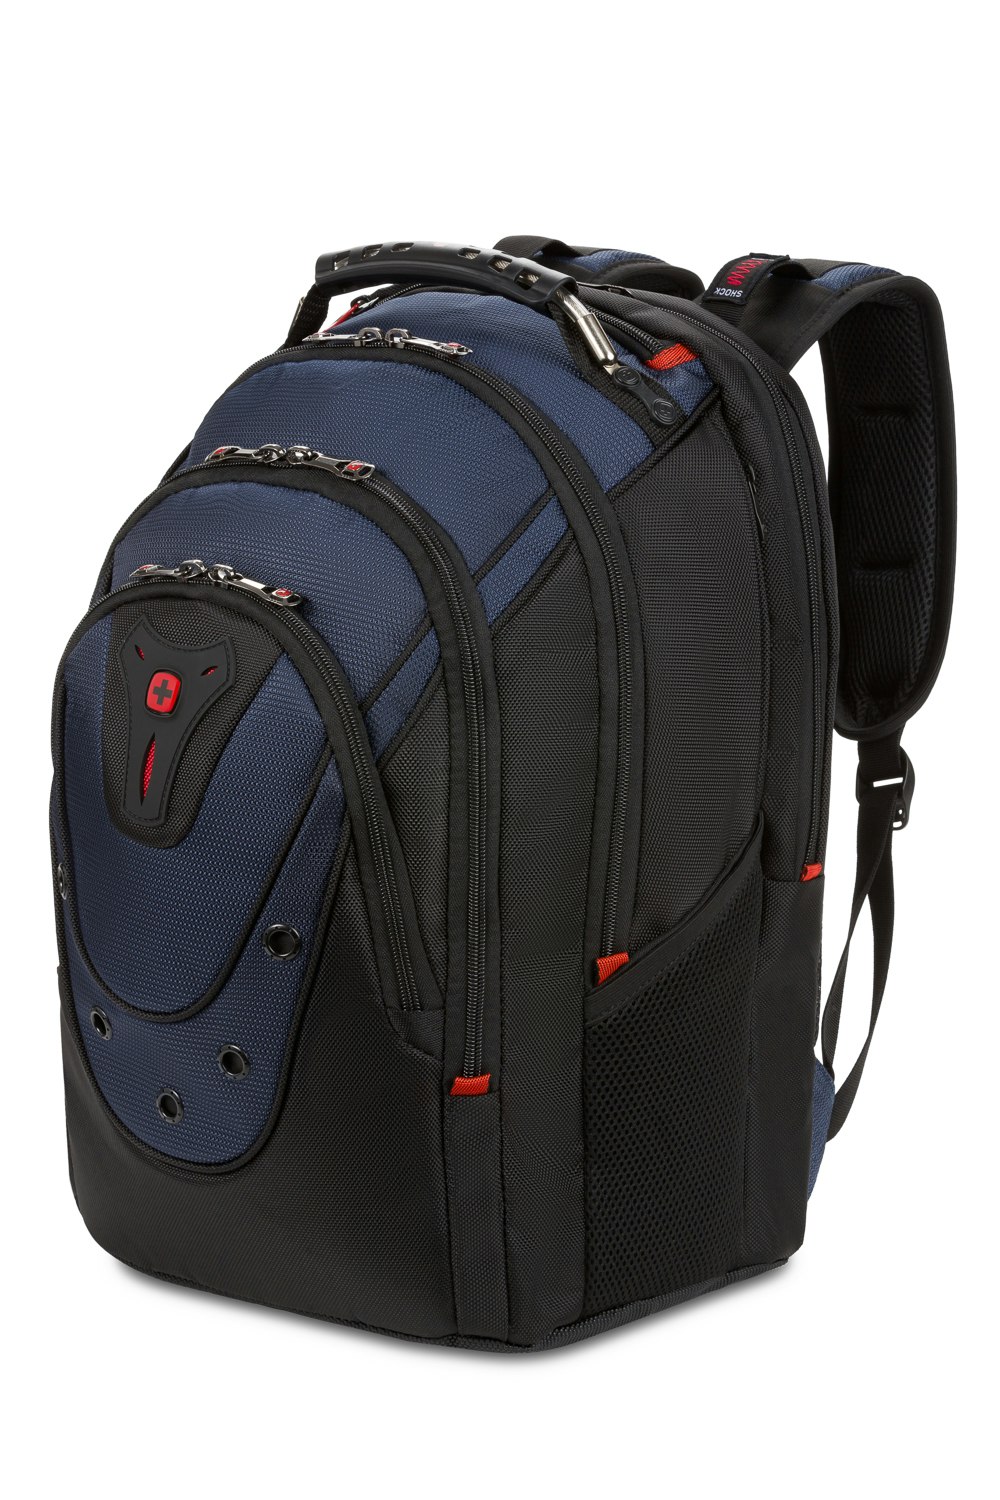 Backpack　inch　Pro　Laptop　16　Black/Navy　Wenger　Ibex